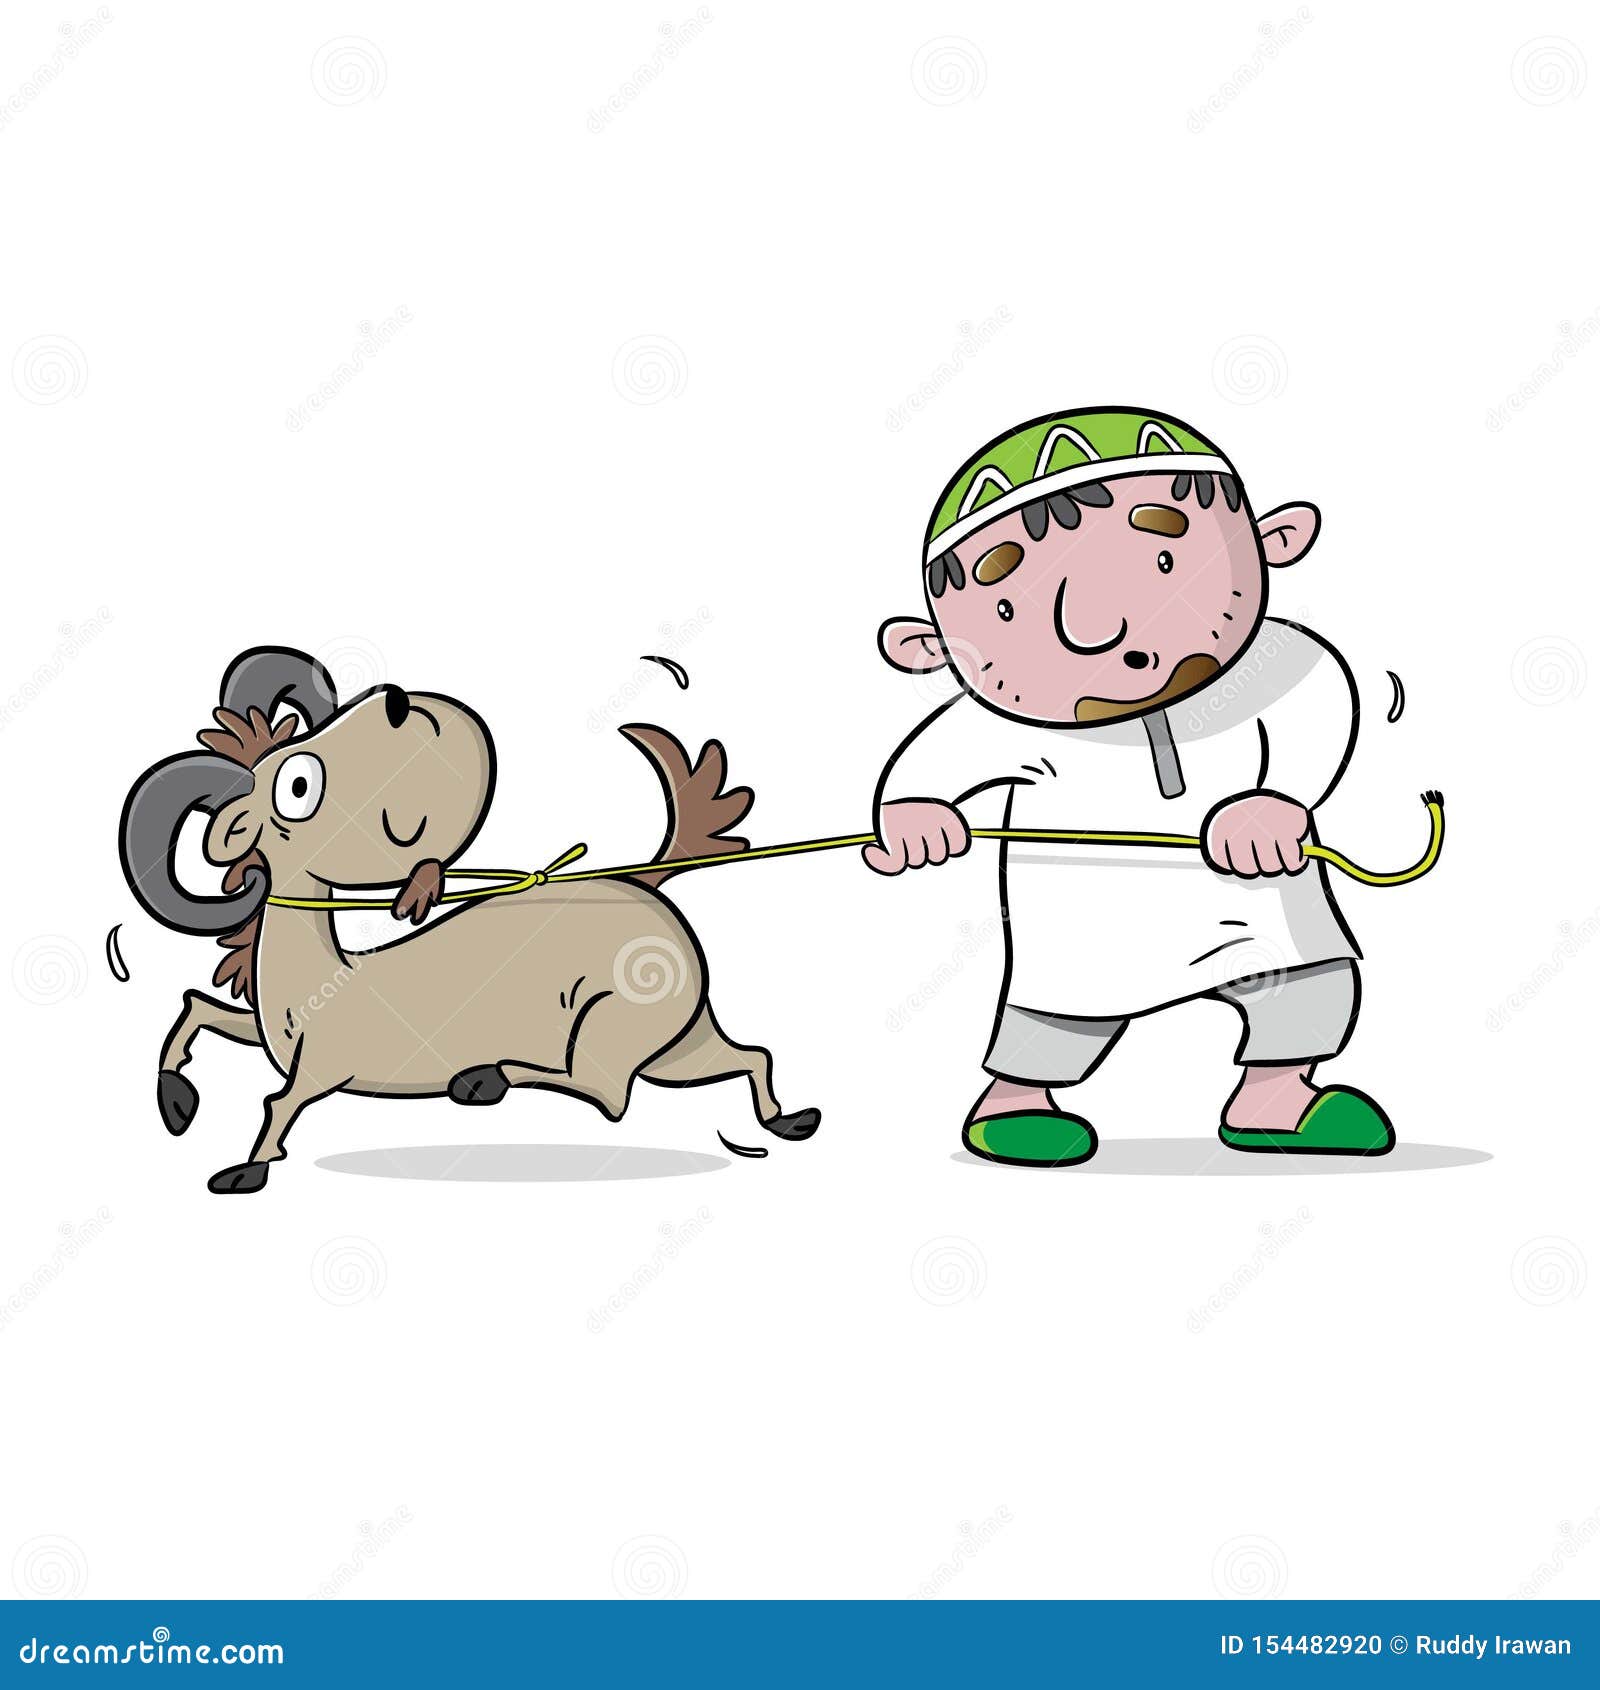 Happy eid al adha stock vector. Illustration of goat - 154482920